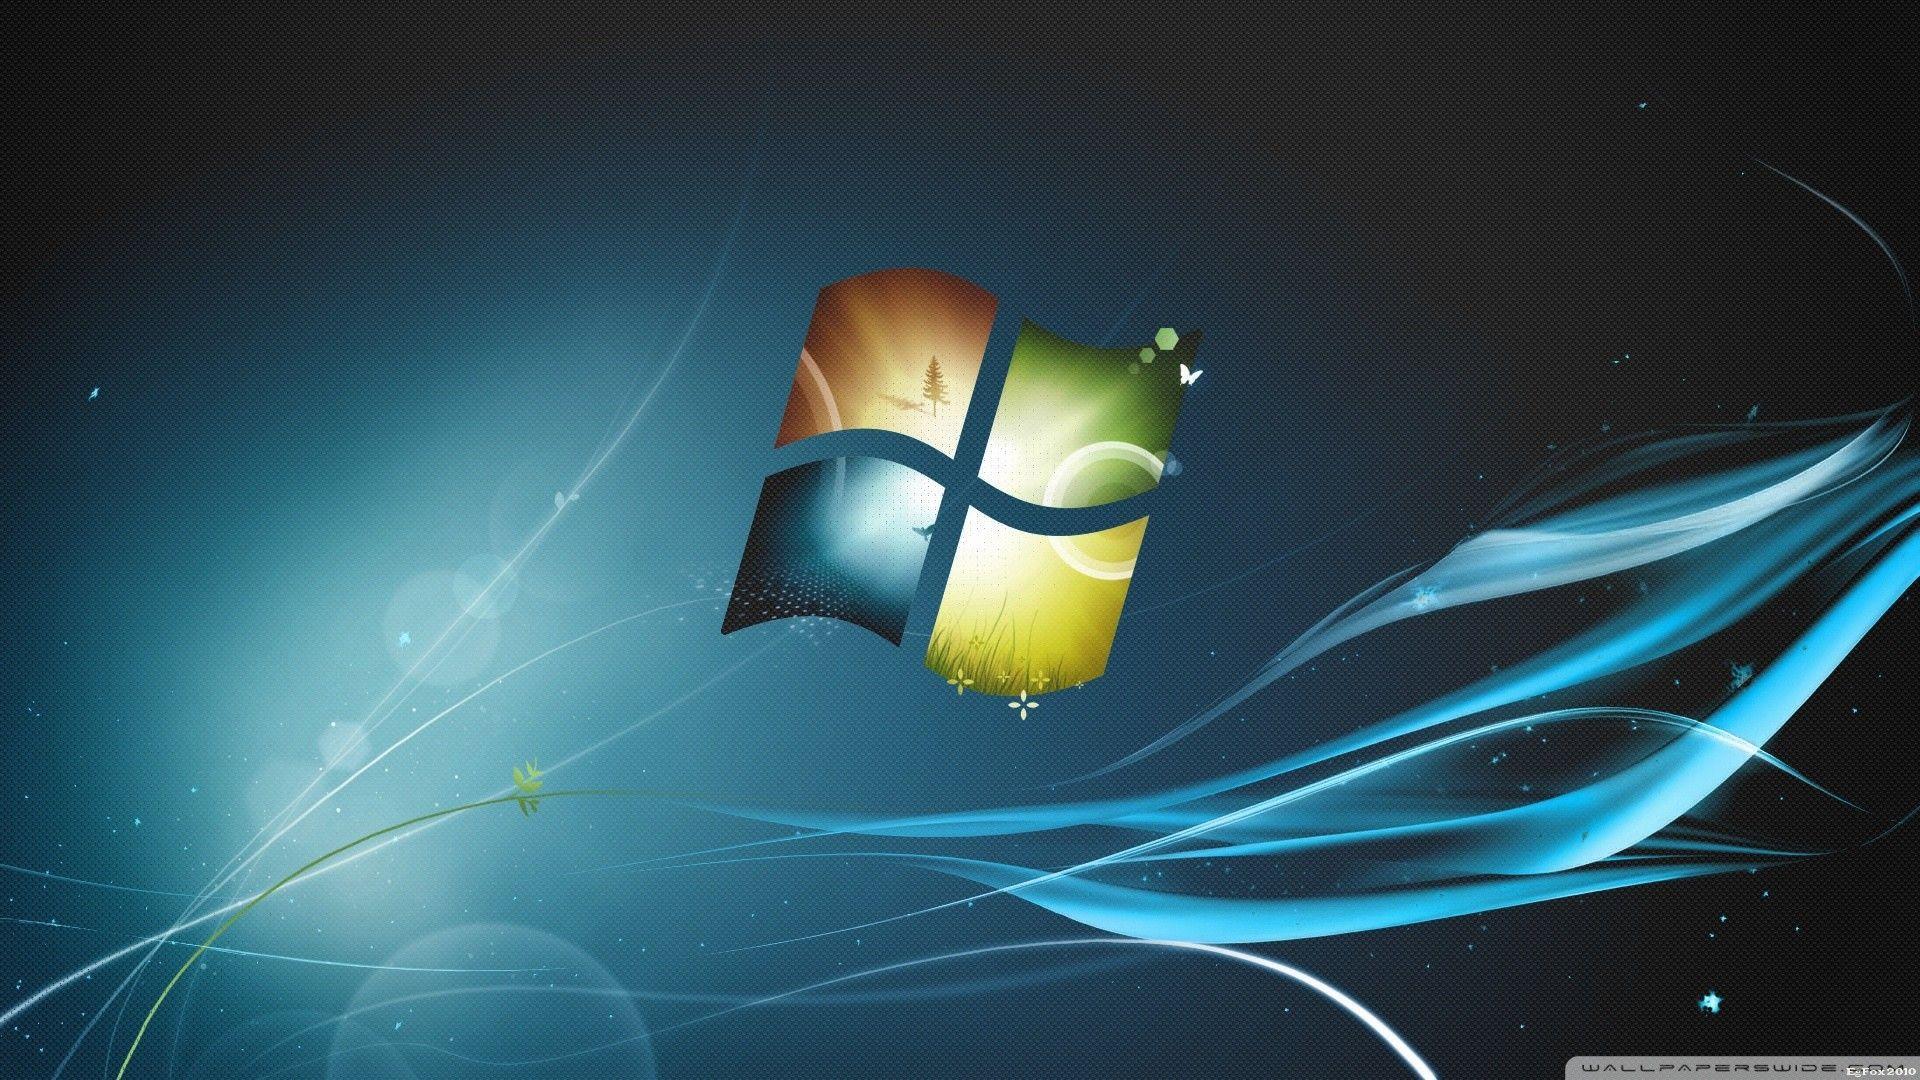 Microsoft Windows 10 Wallpapers - Wallpaper Cave